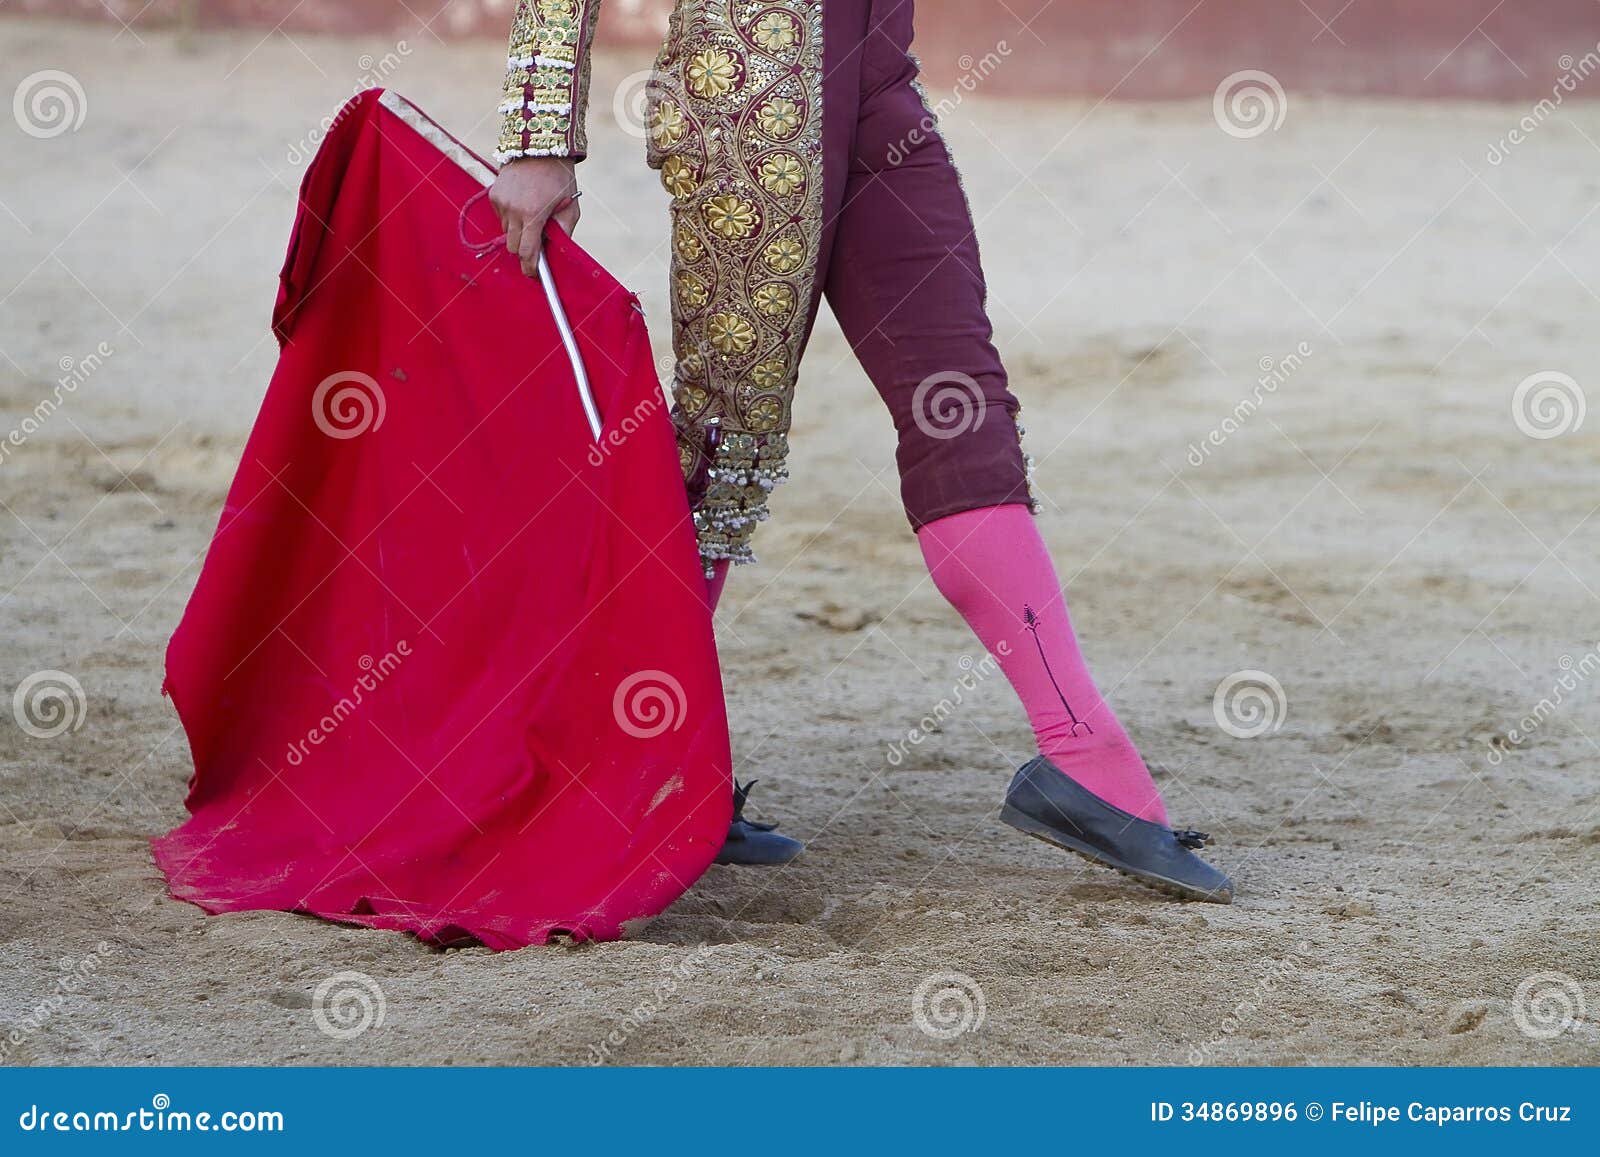 bullfighter with the muleta